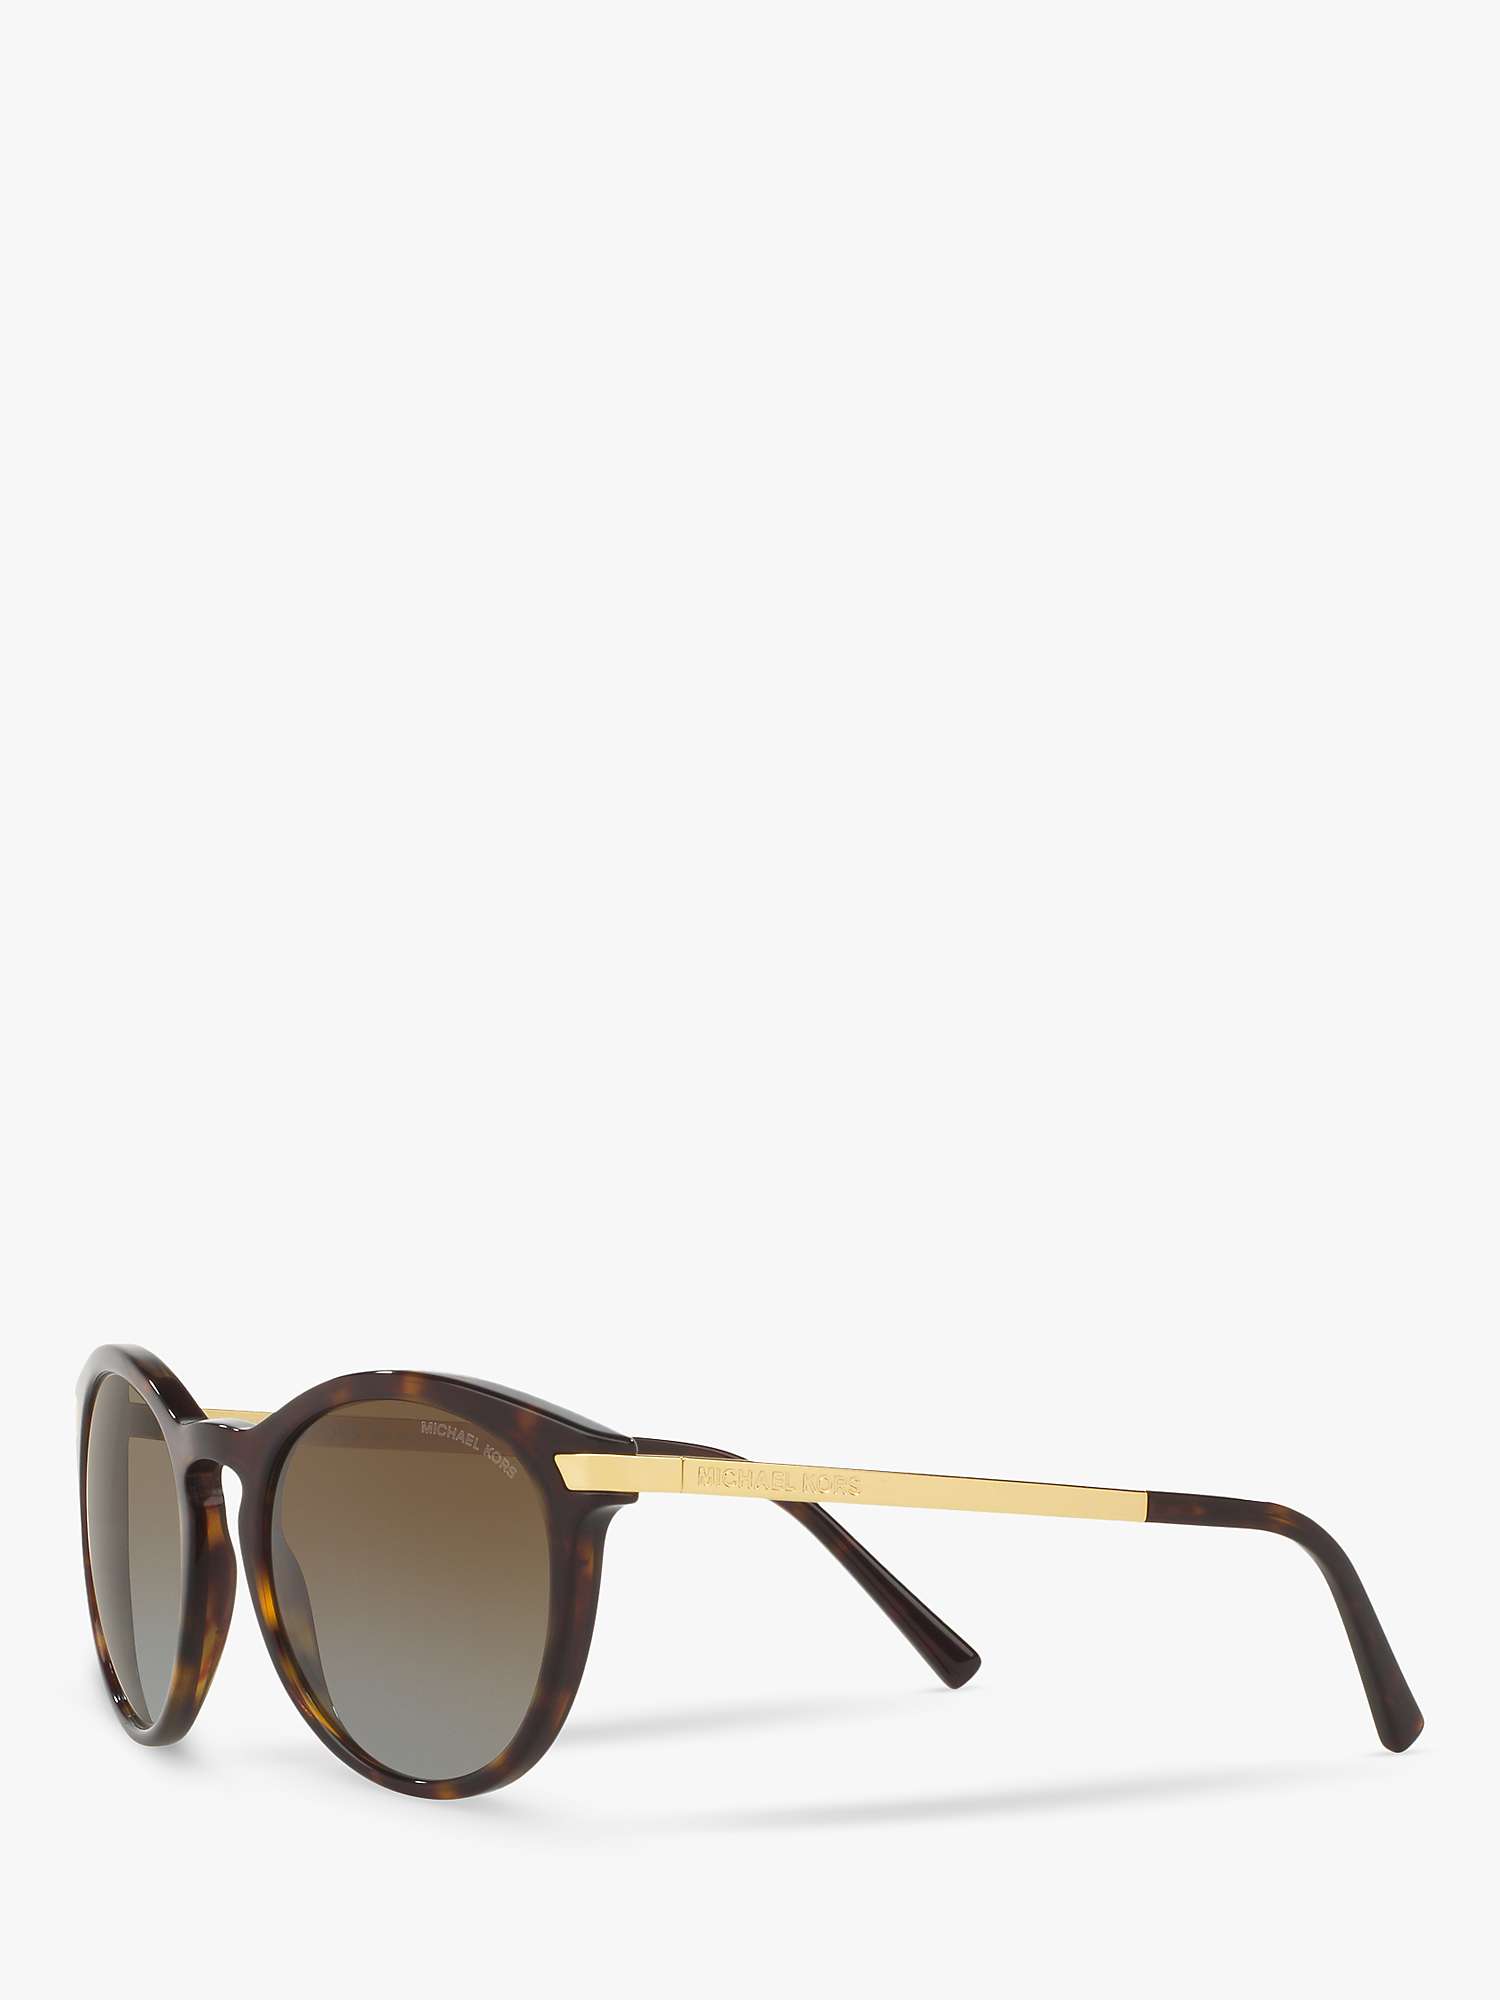 Buy Michael Kors MK2023 Women's Polarised Round Sunglasses, Tortoise/Brown Gradient Online at johnlewis.com